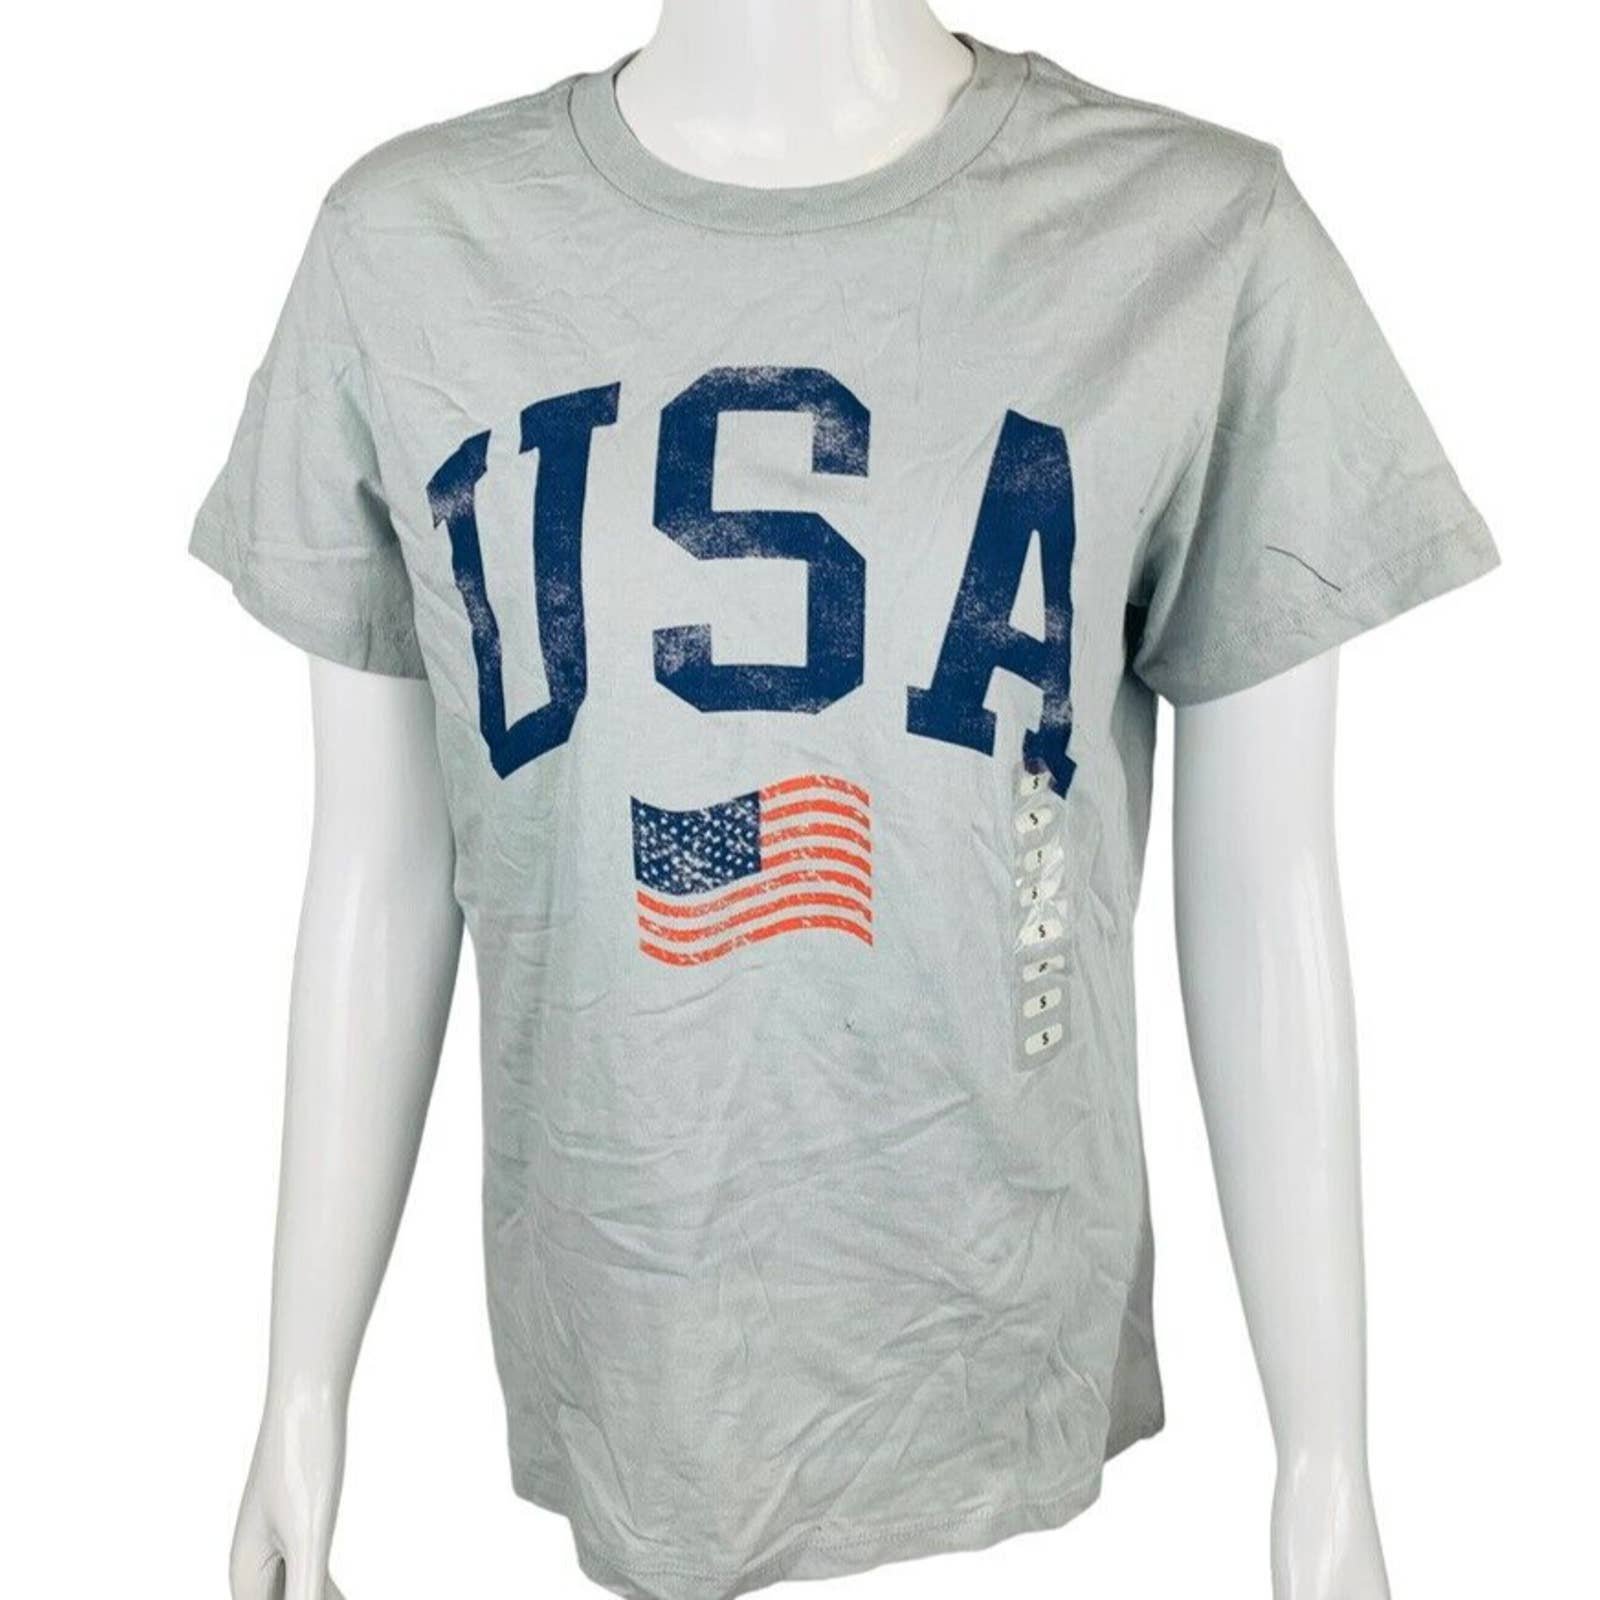 Simple New Grayson Threads Juniors Sz Small USA Tee Shirt Top Gray NWT iNmRDAQJa Online Exclusive